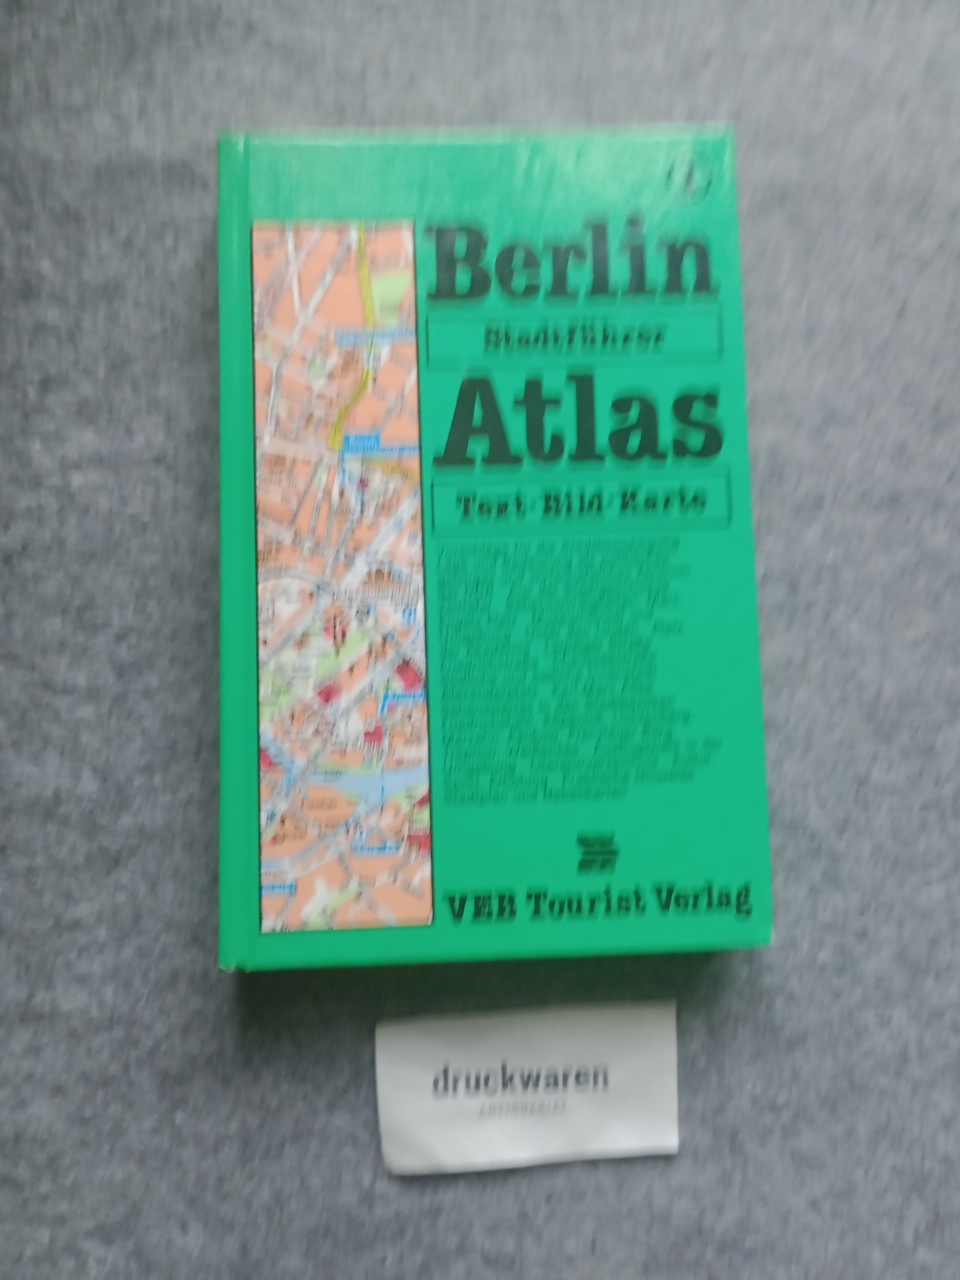 Tourist-Stadtführer-Atlas 1 : Berlin. - Weise, Klaus